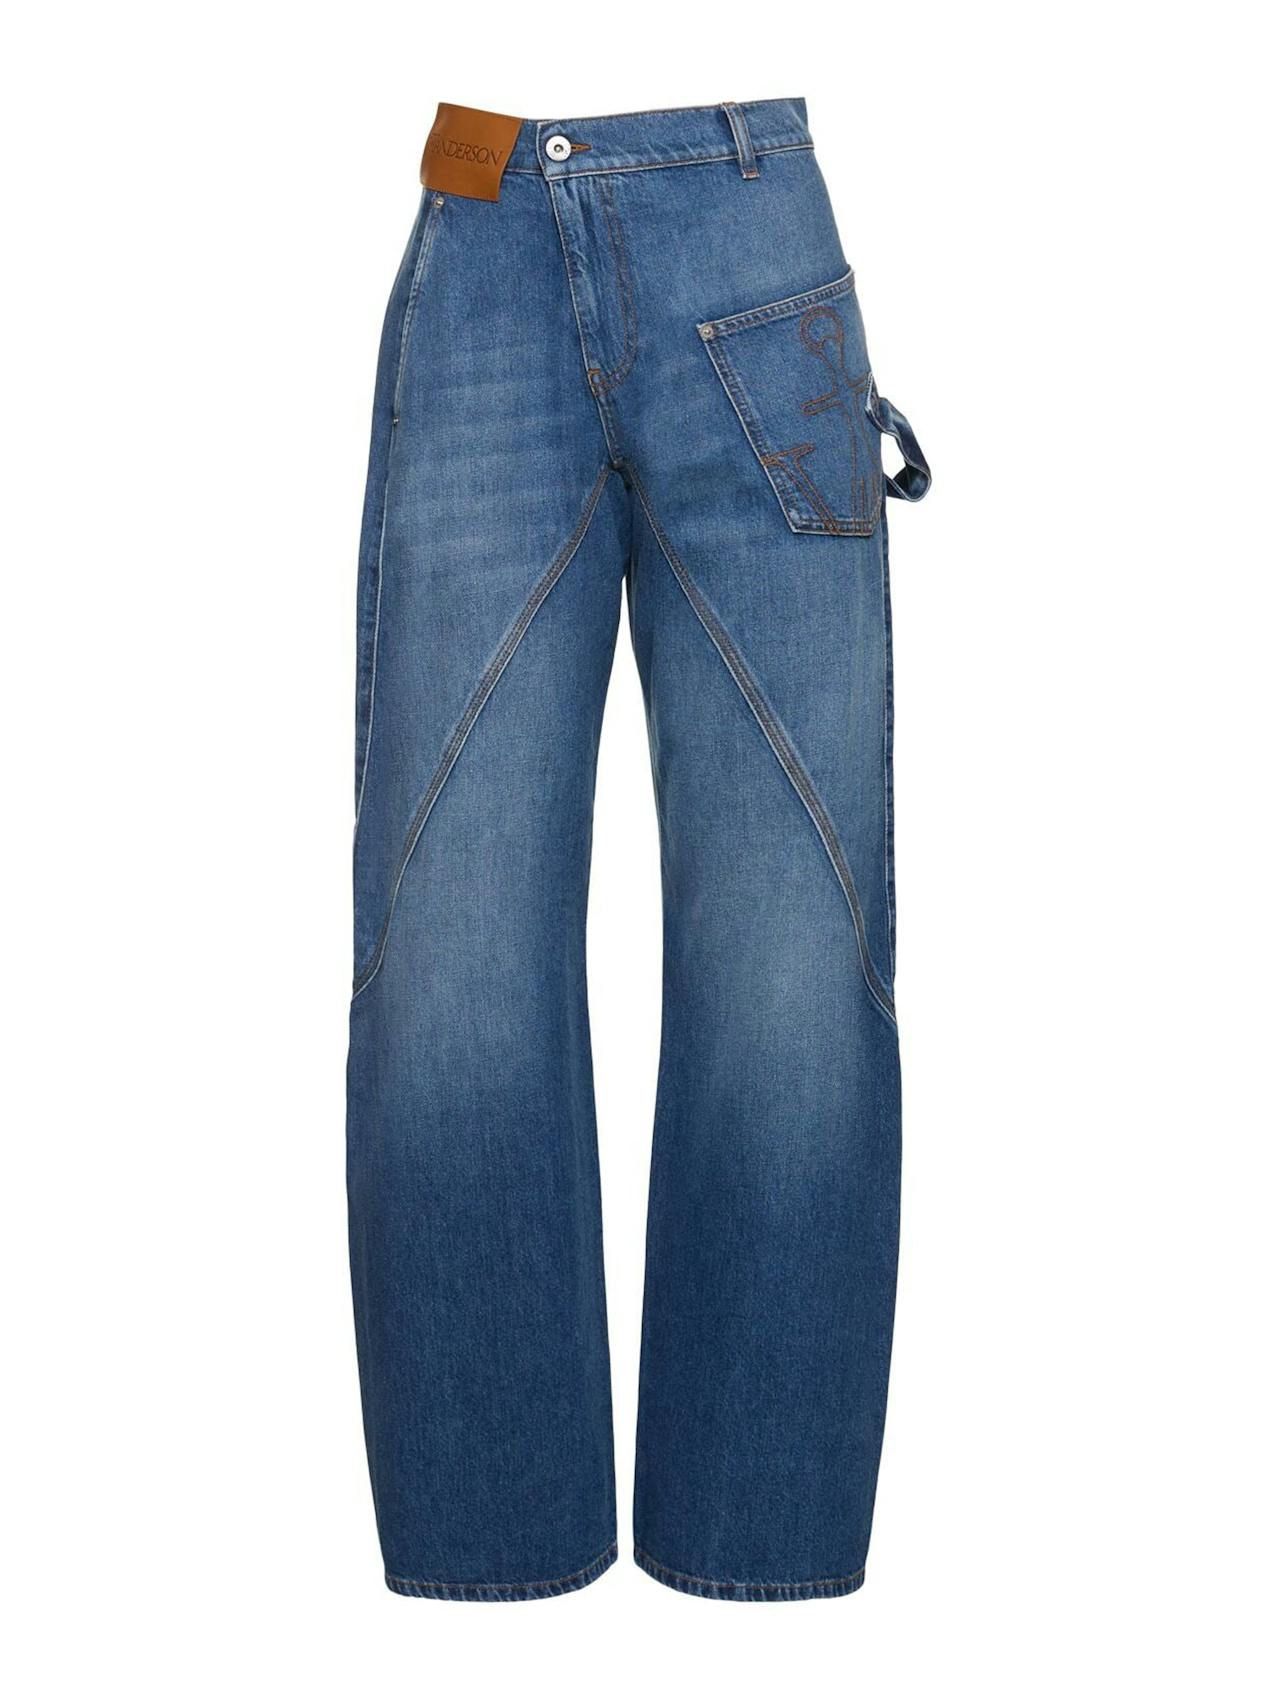 Twisted denim workwear wide jeans